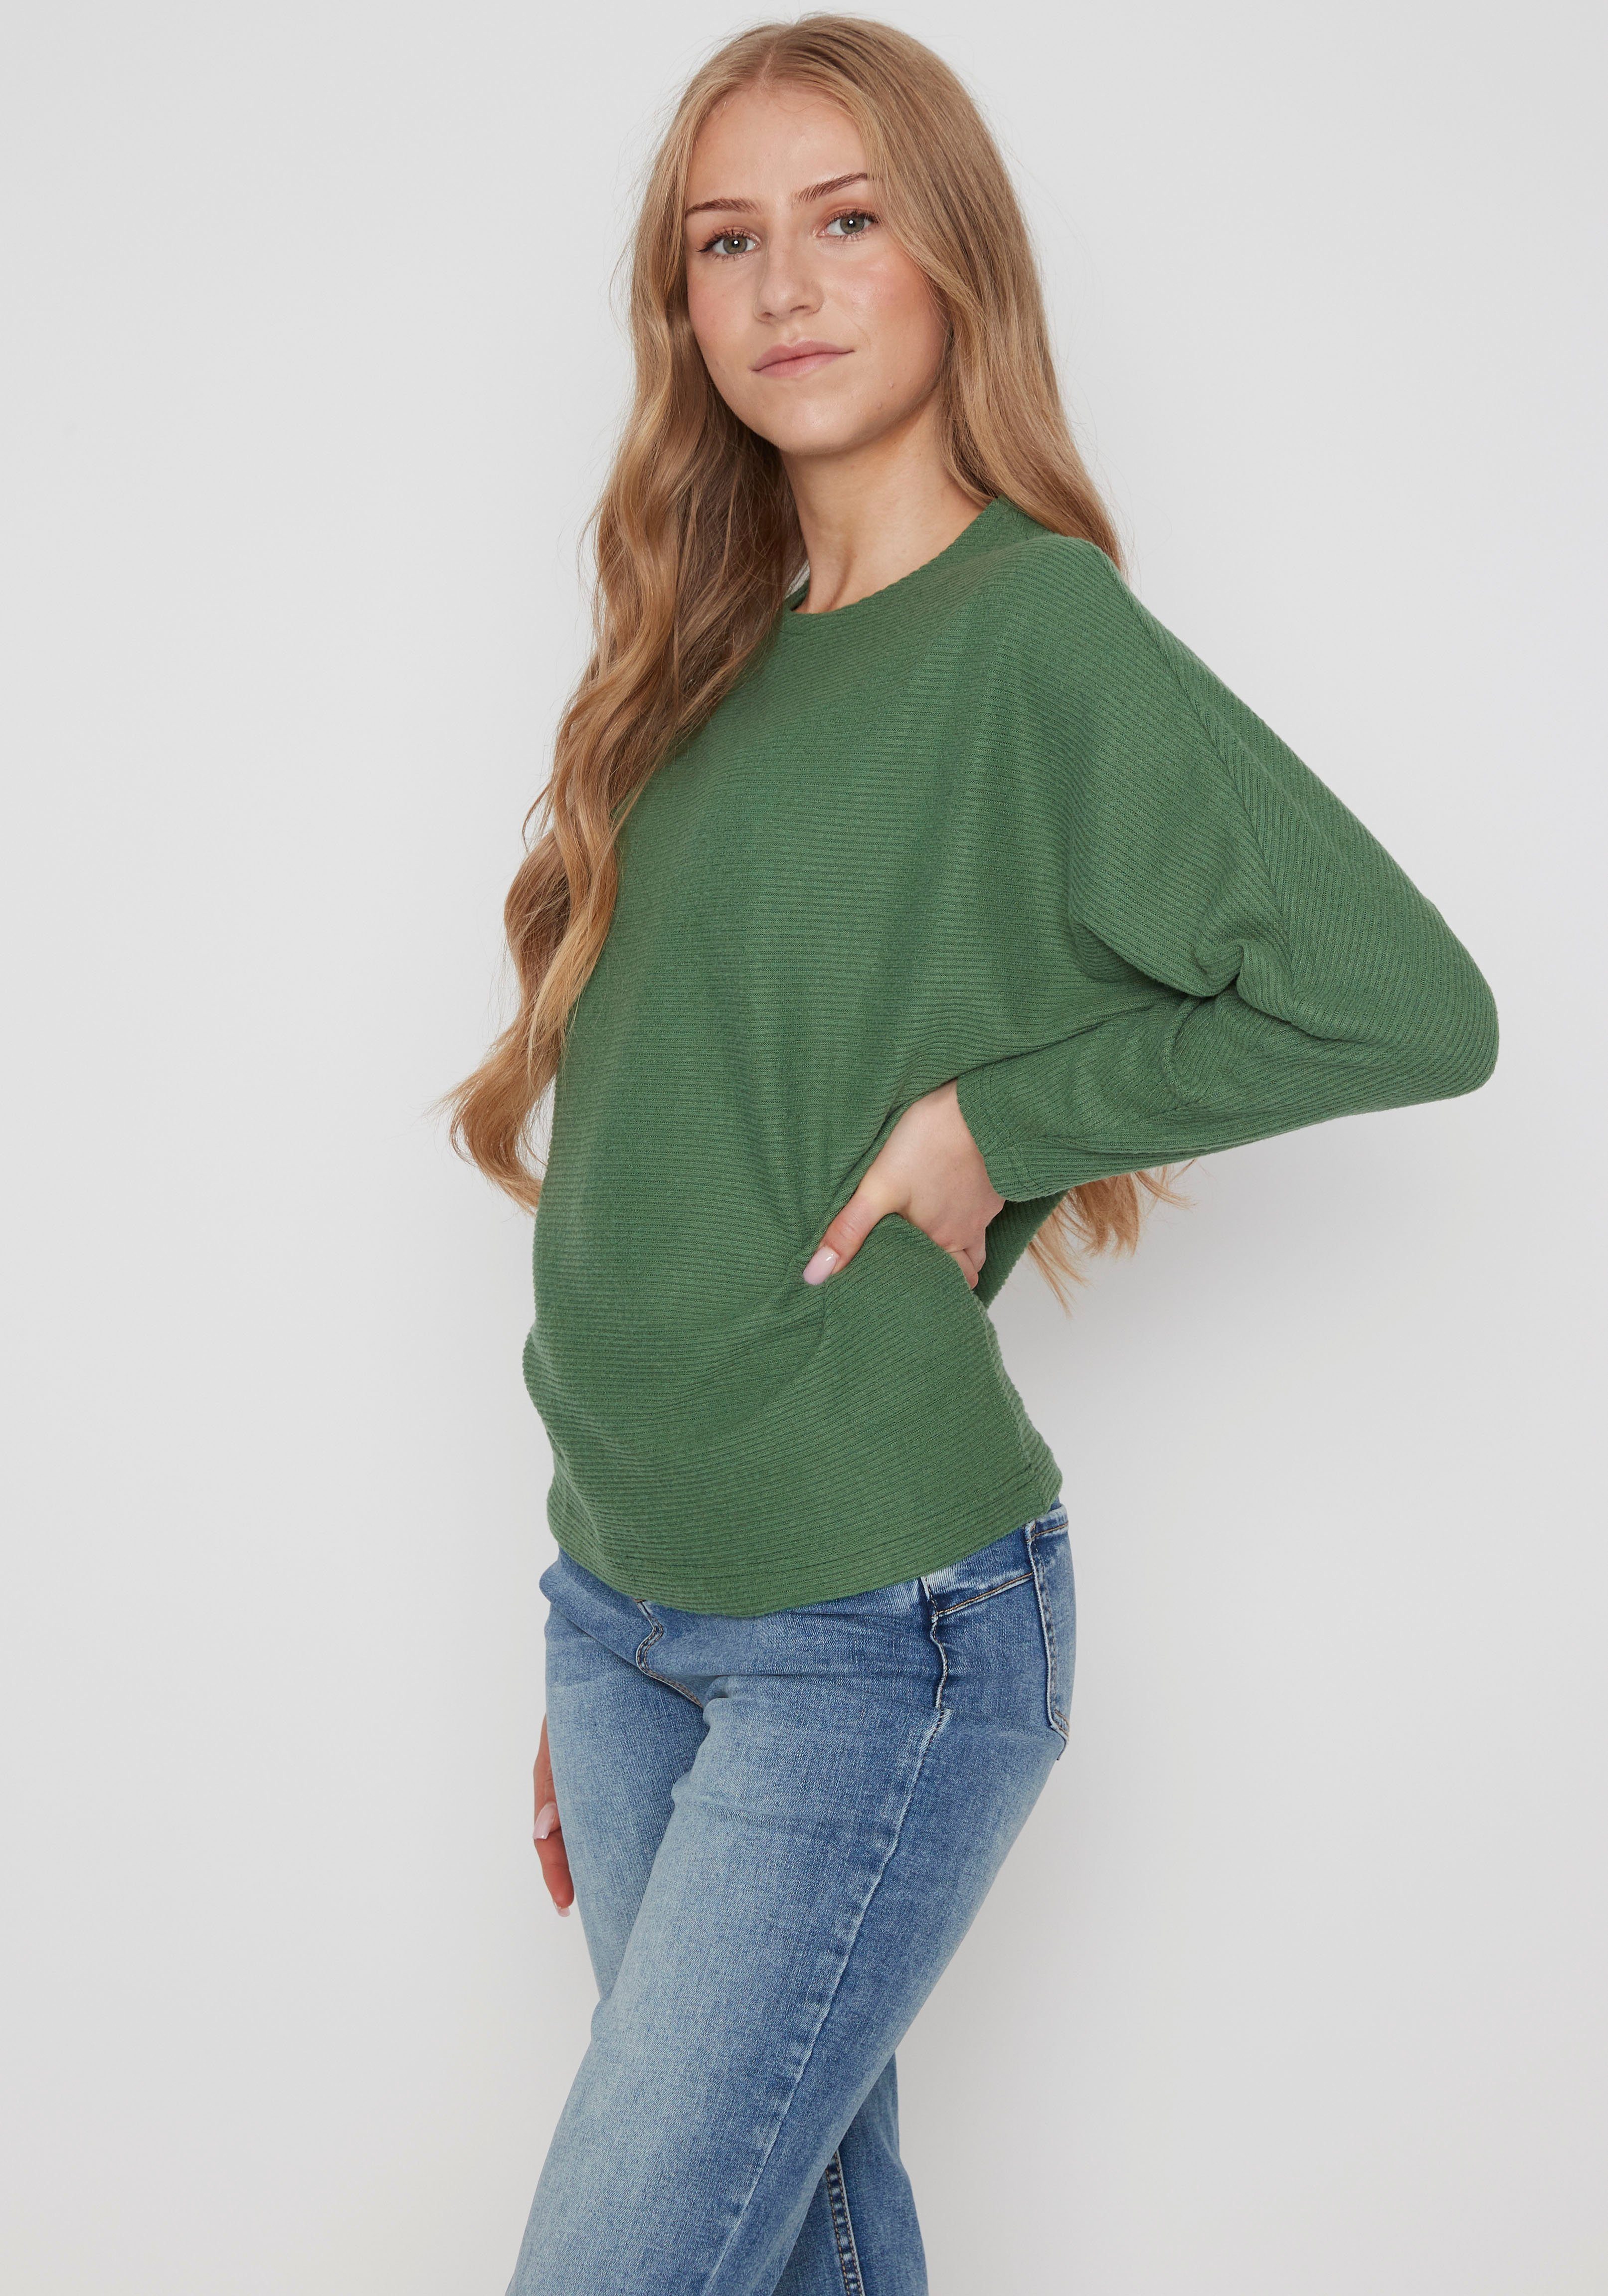 HaILY’S T-Shirt LS P TP fern green Ma44ira marl